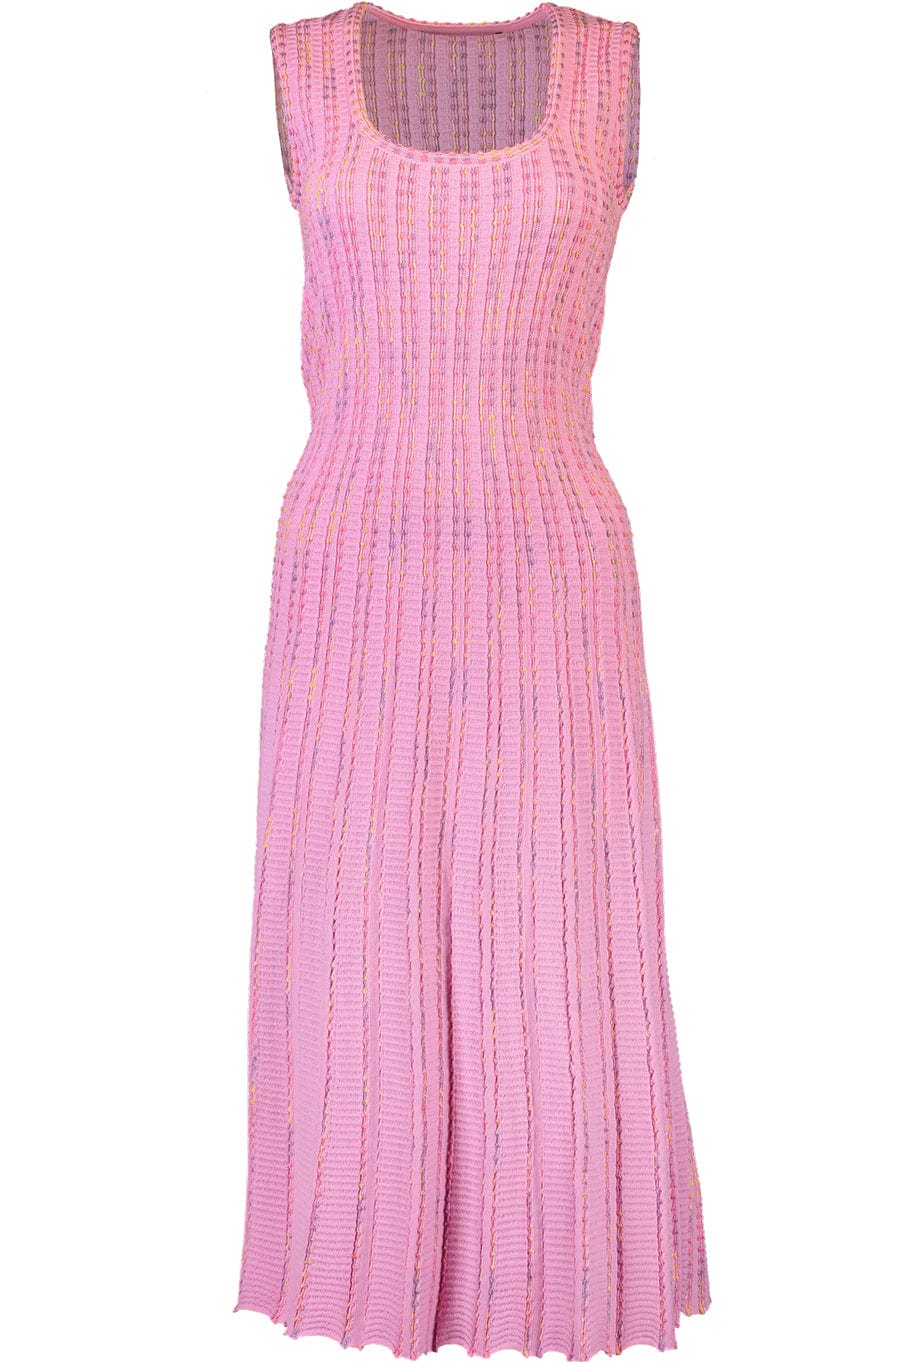 Sara Sleeveless Dress - Pink Lilac CLOTHINGDRESSCASUAL ANTONINO VALENTI   